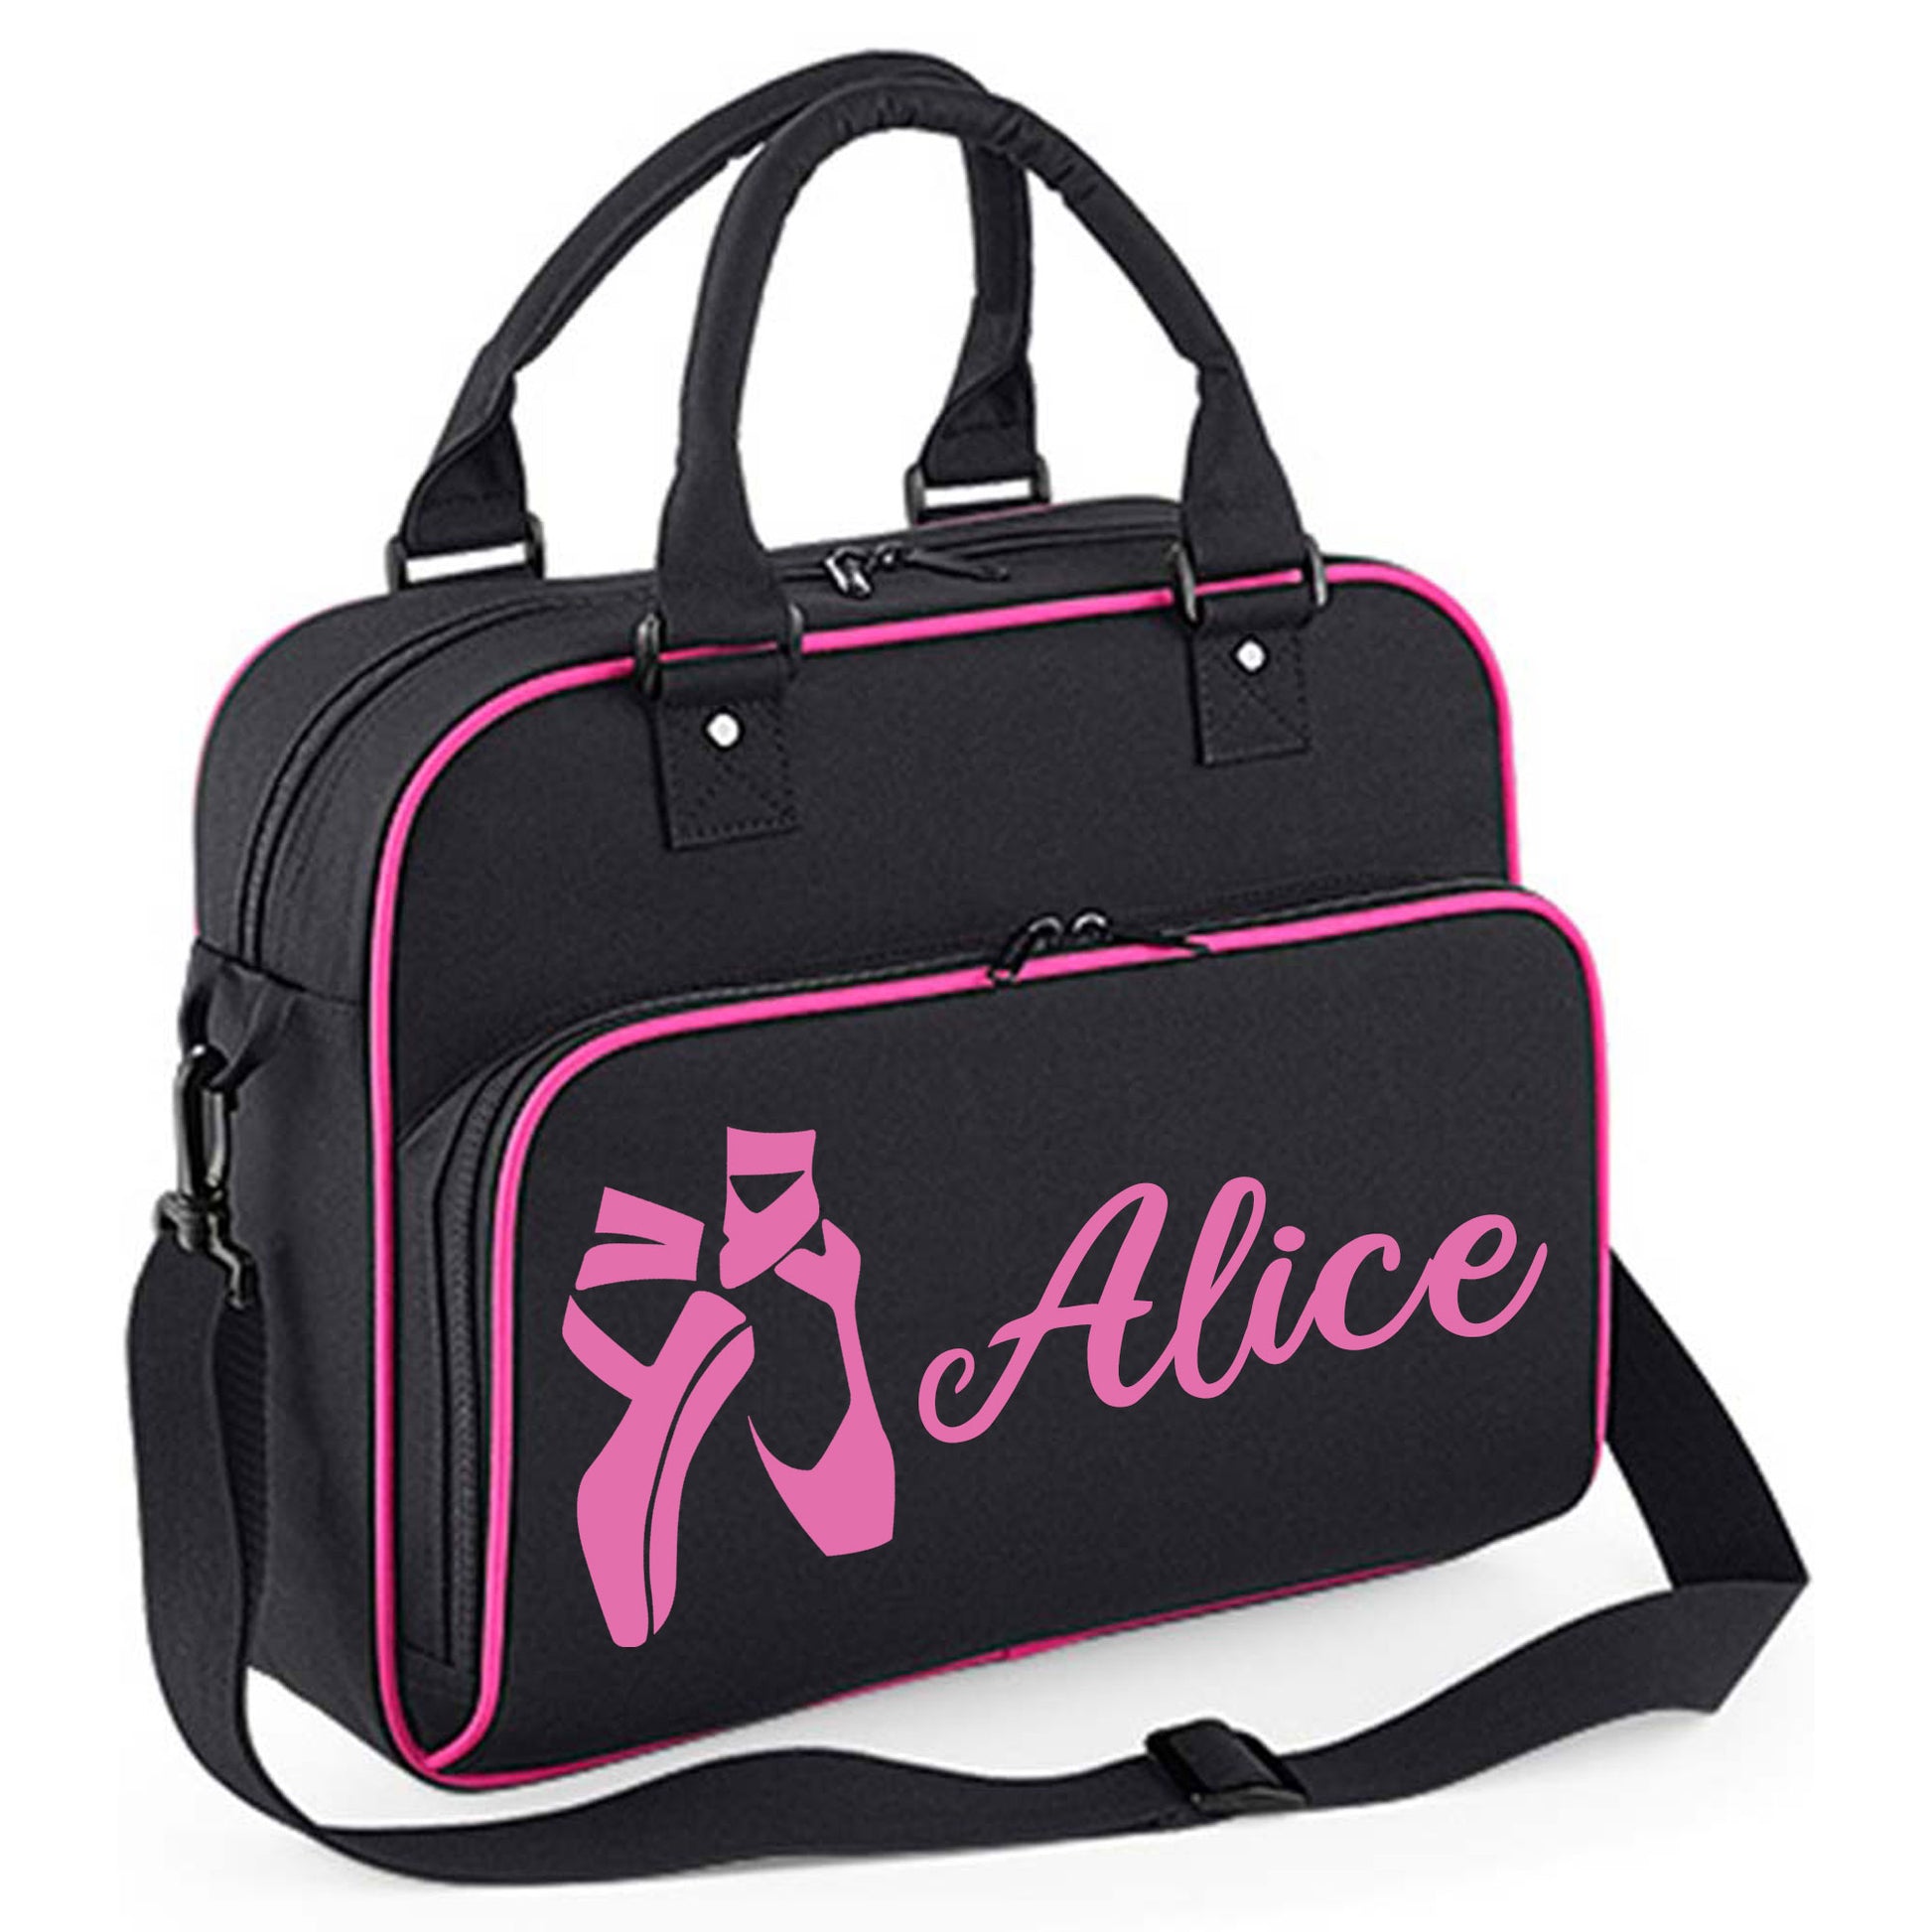 Personalised Dance Bag Kids | Girls Children's Ballet School Bag  - Always Looking Good - Black with Pink Piping Ballet Shoes 